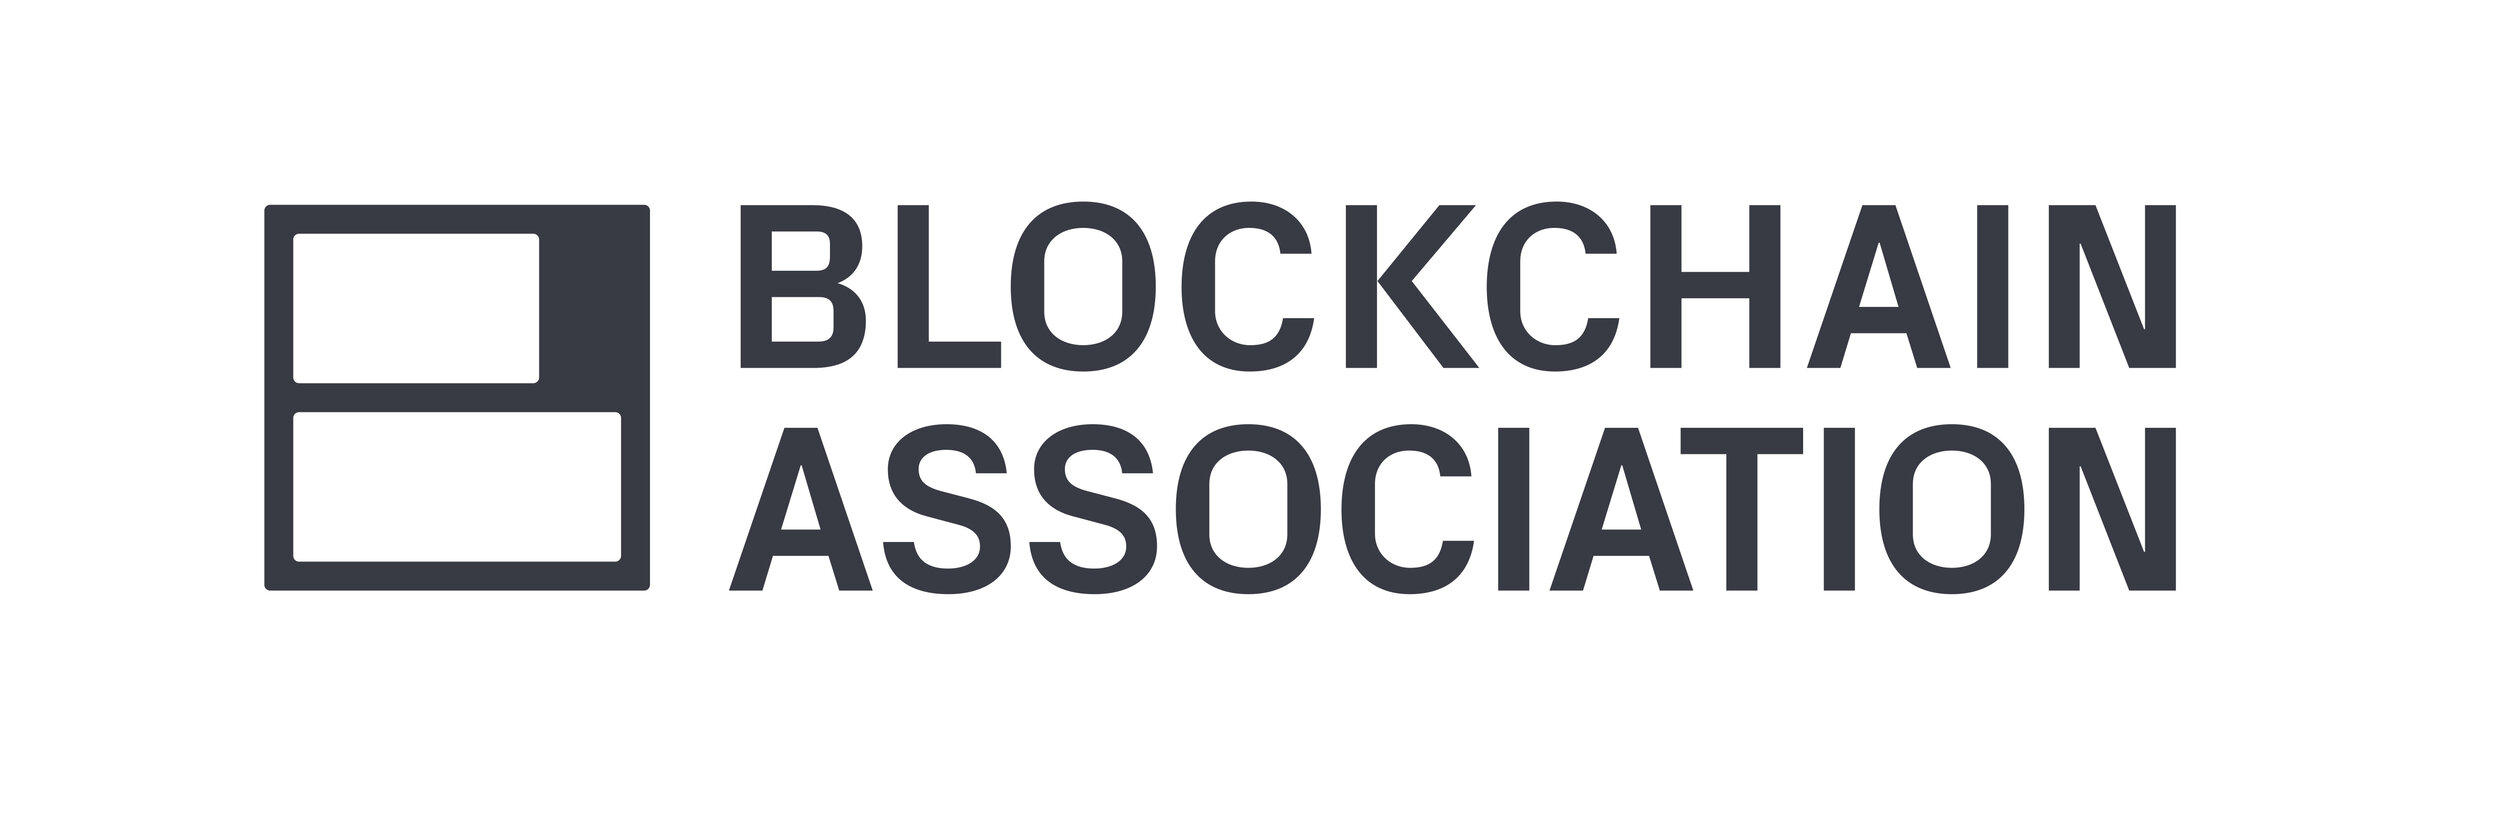 Logo-Blockchain-Association.jpg